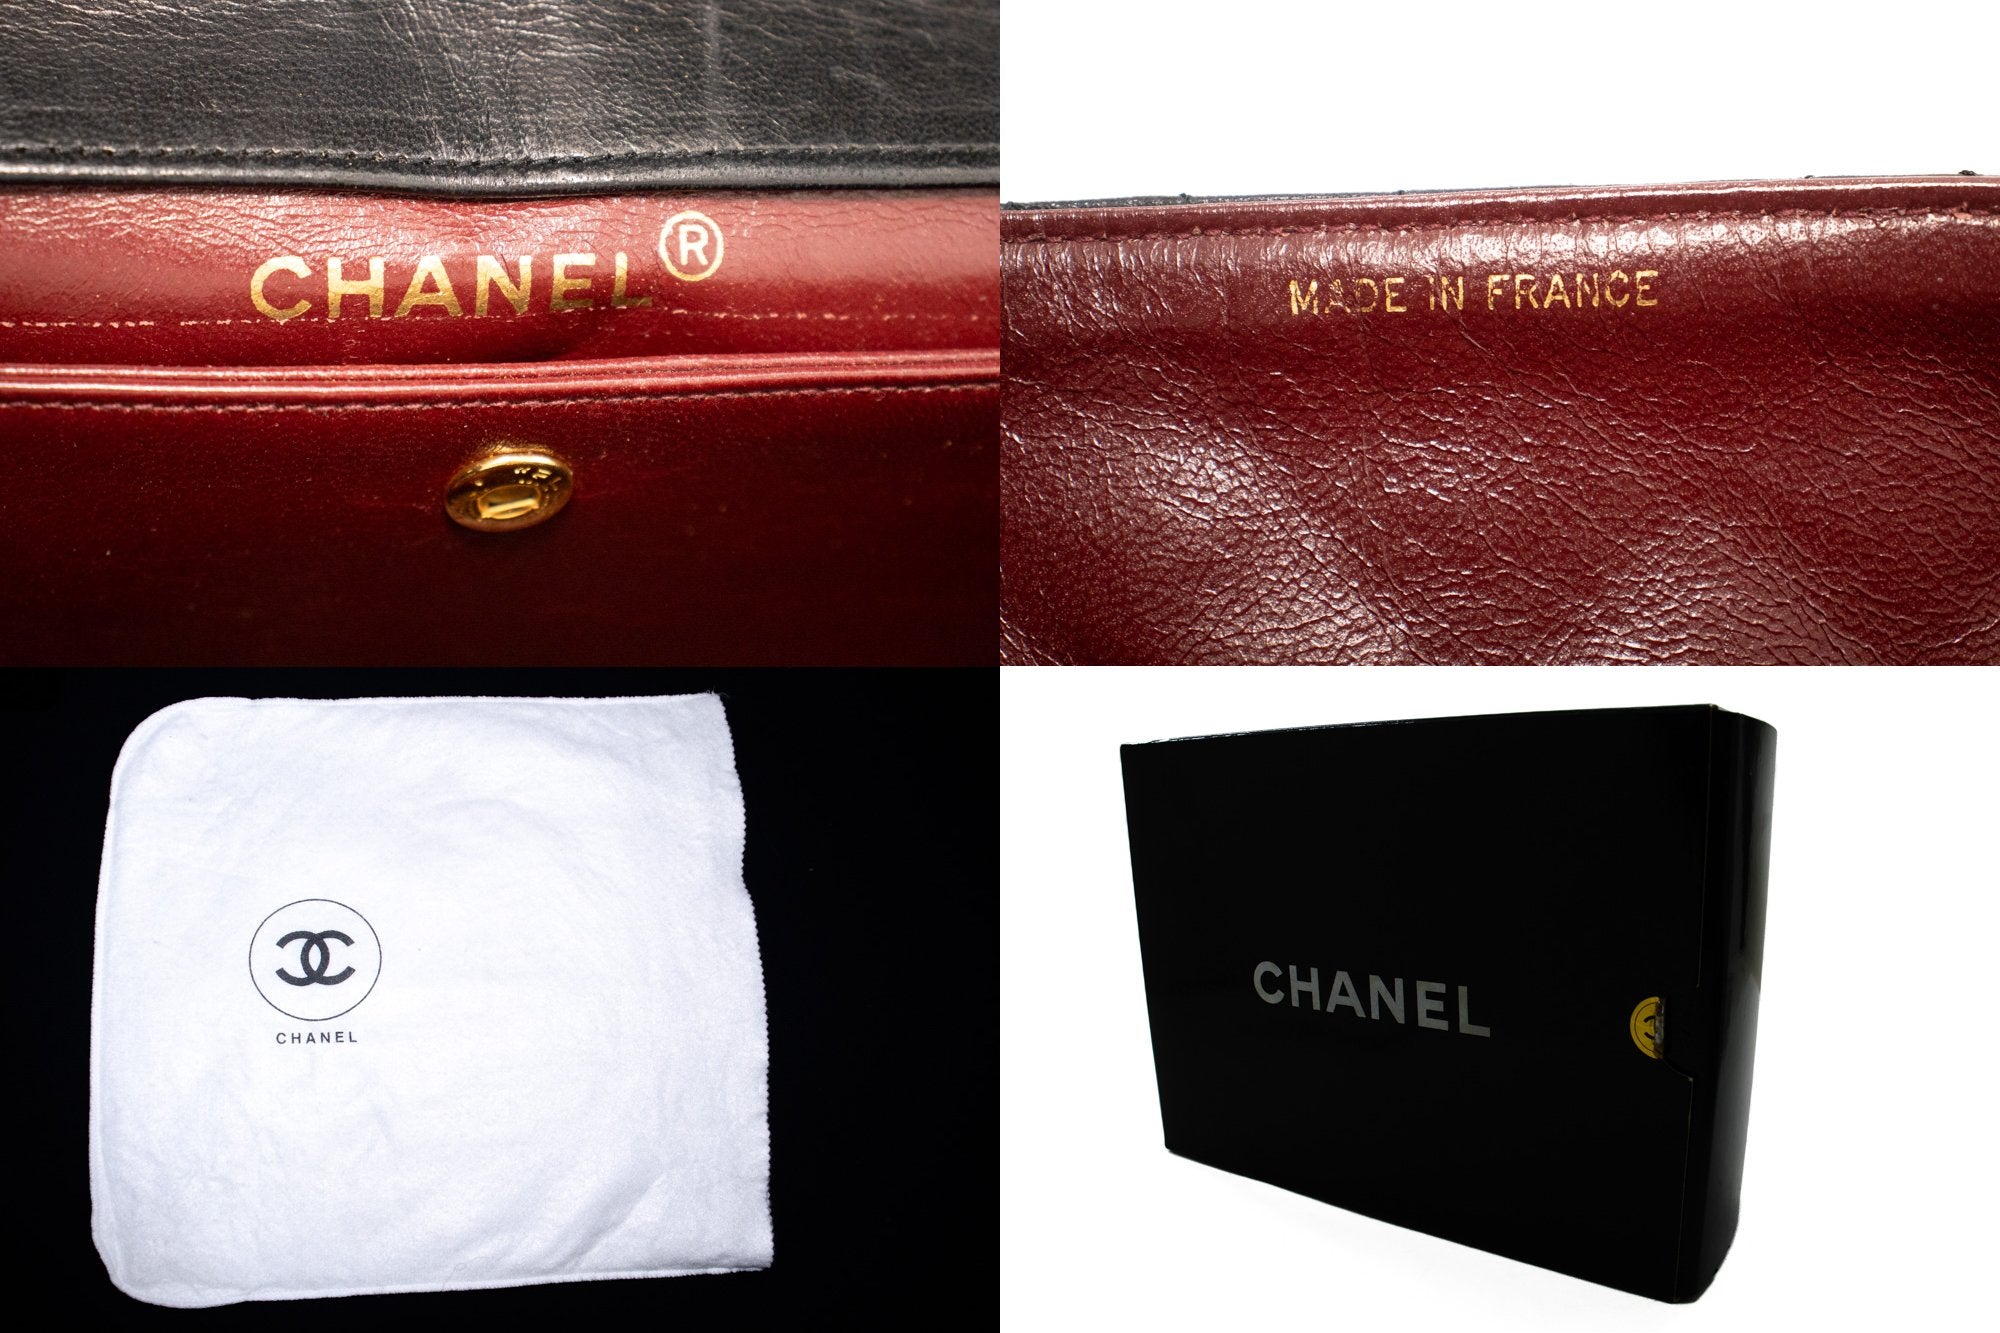 Chanel Vintage Chanel 8 Red Quilted Leather Shoulder Flap Bag